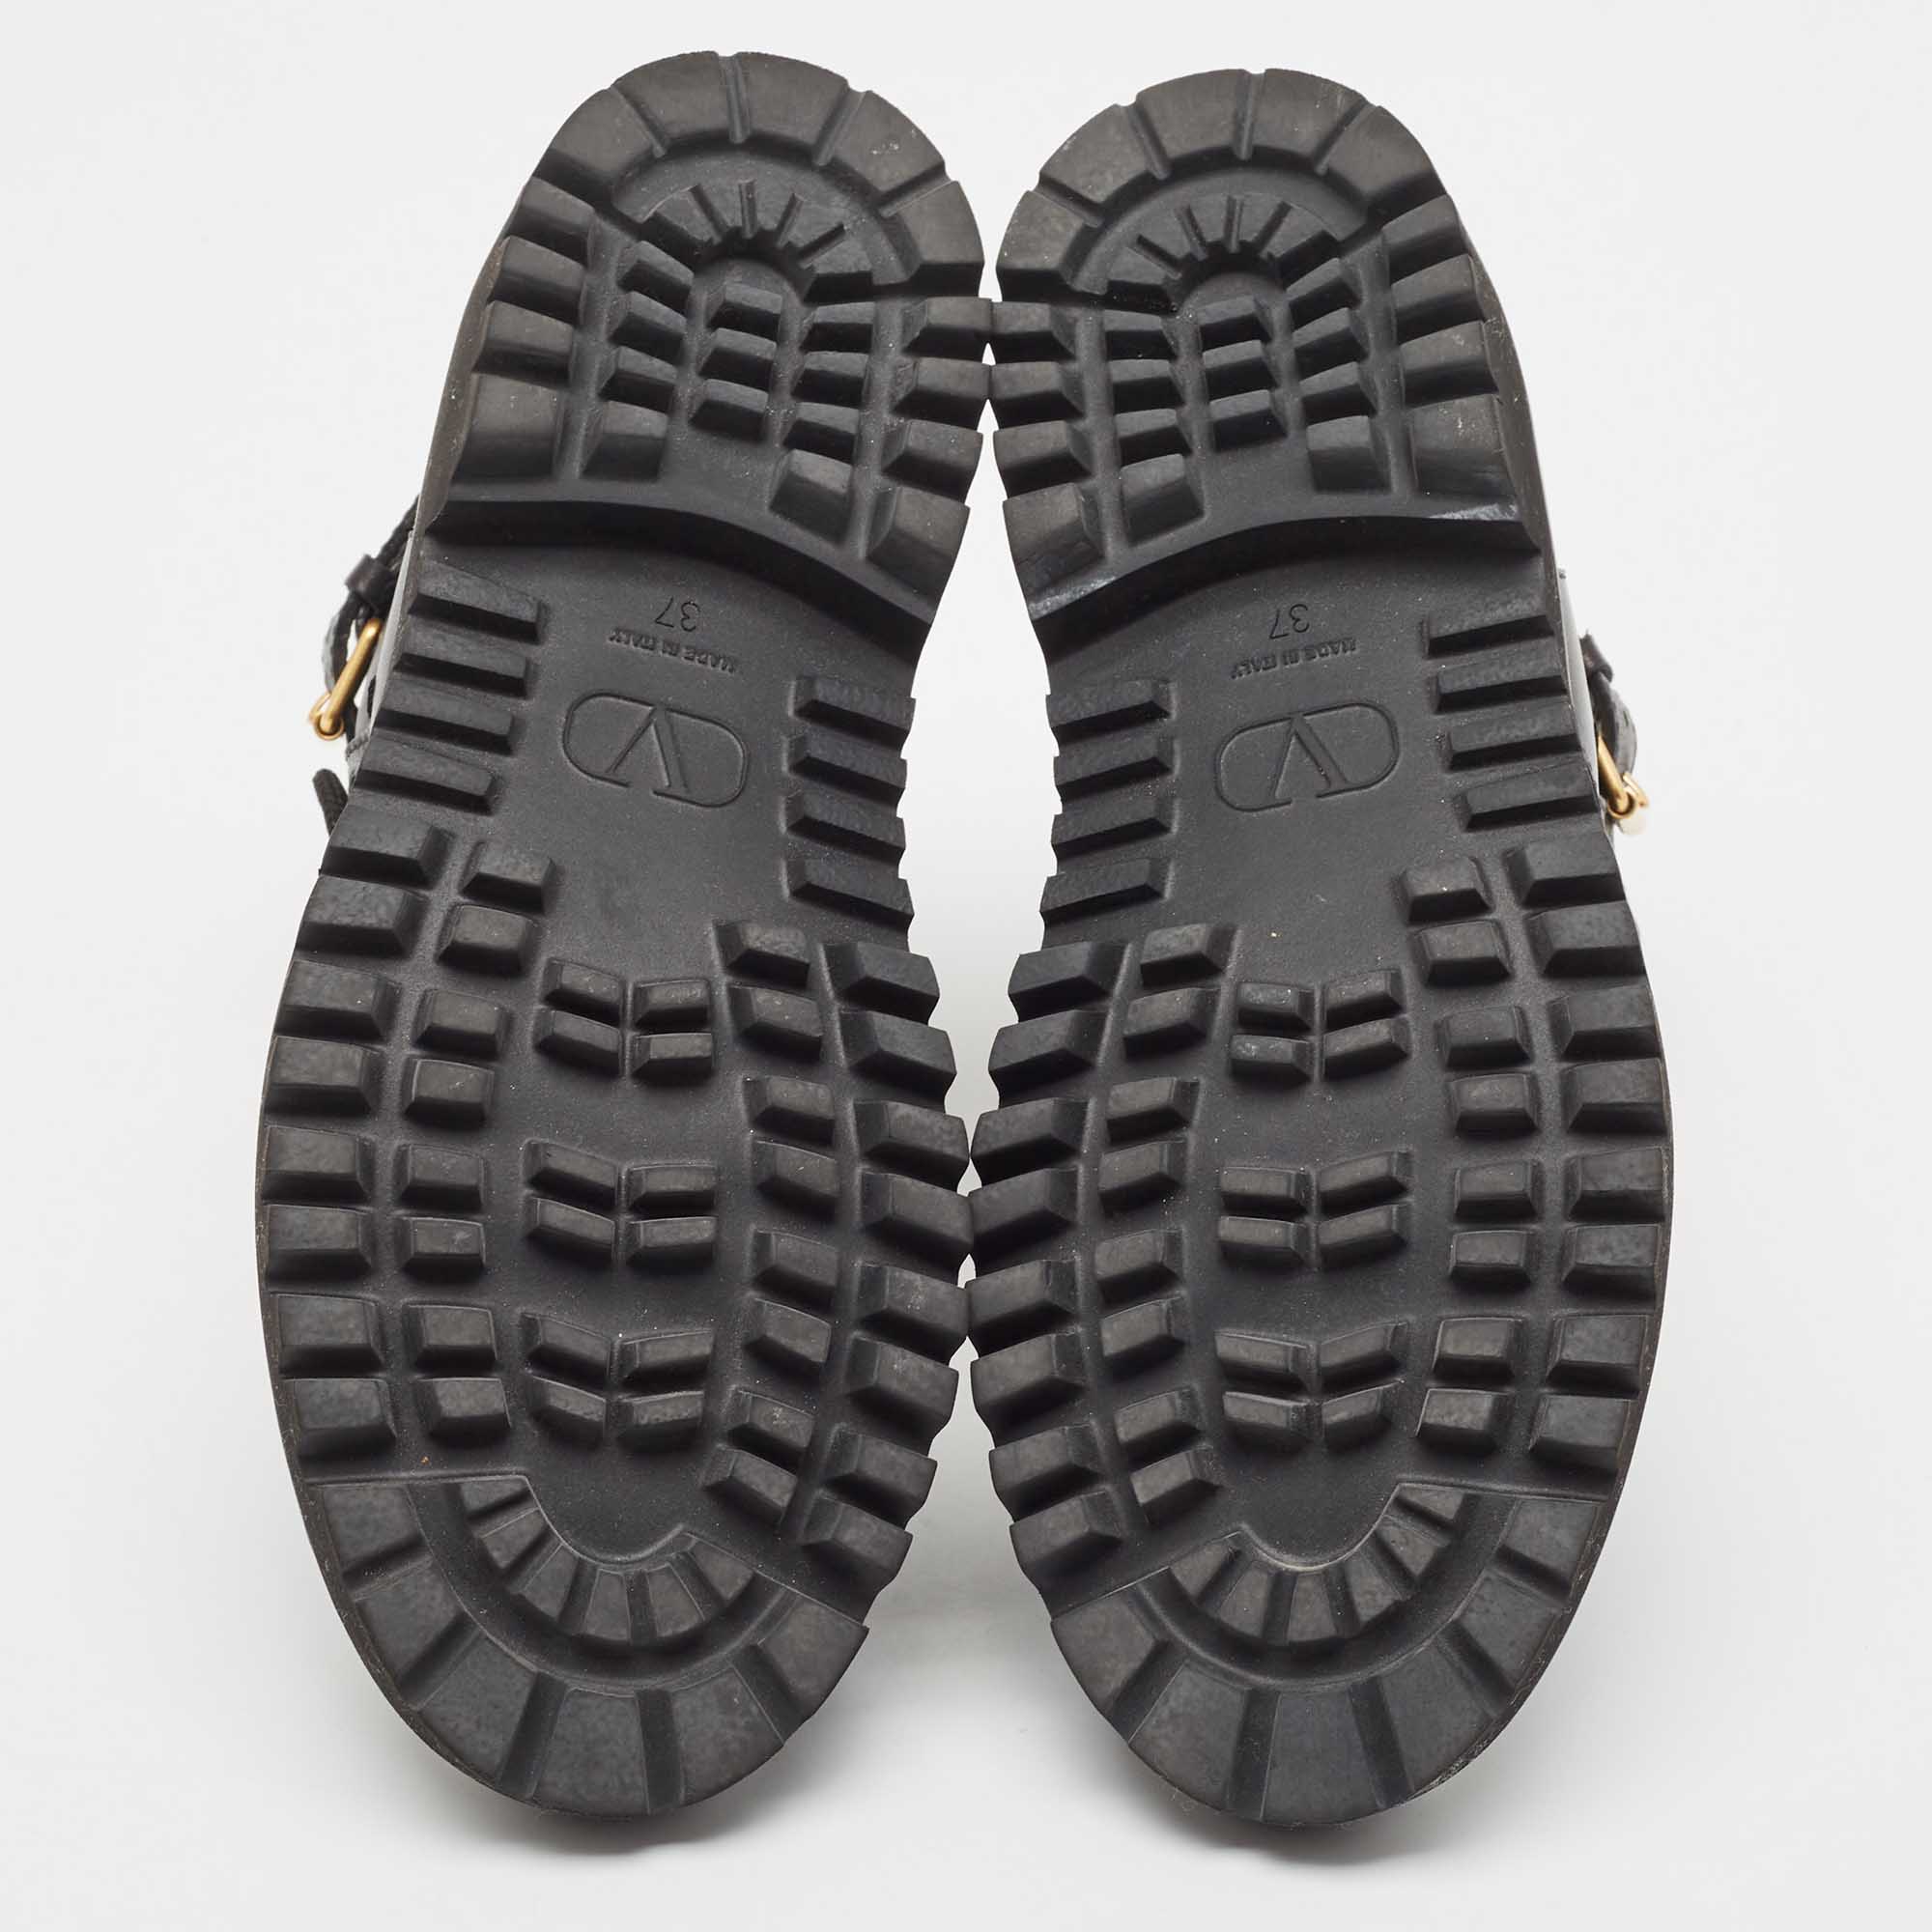 Valentino Black Leather Vlogo Signature  Ankle Boots Size 37